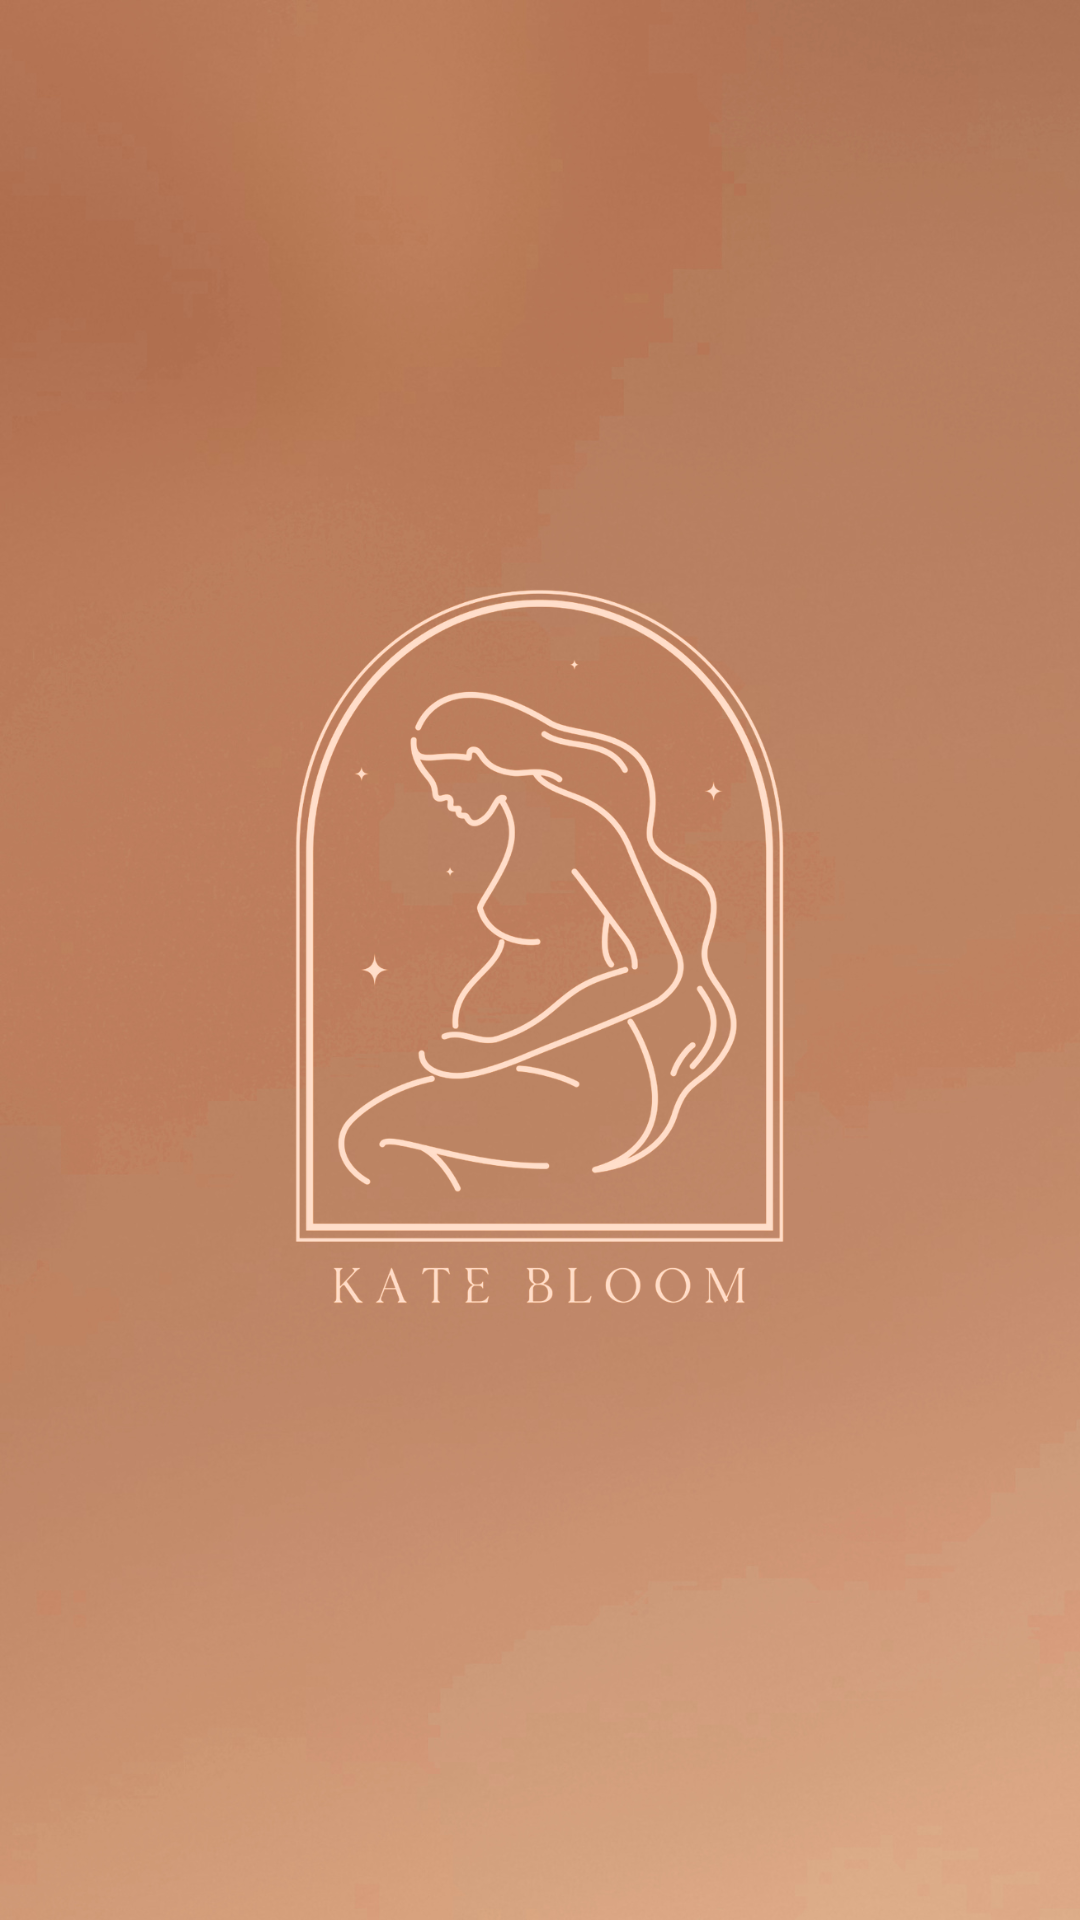 Kate bloom pics